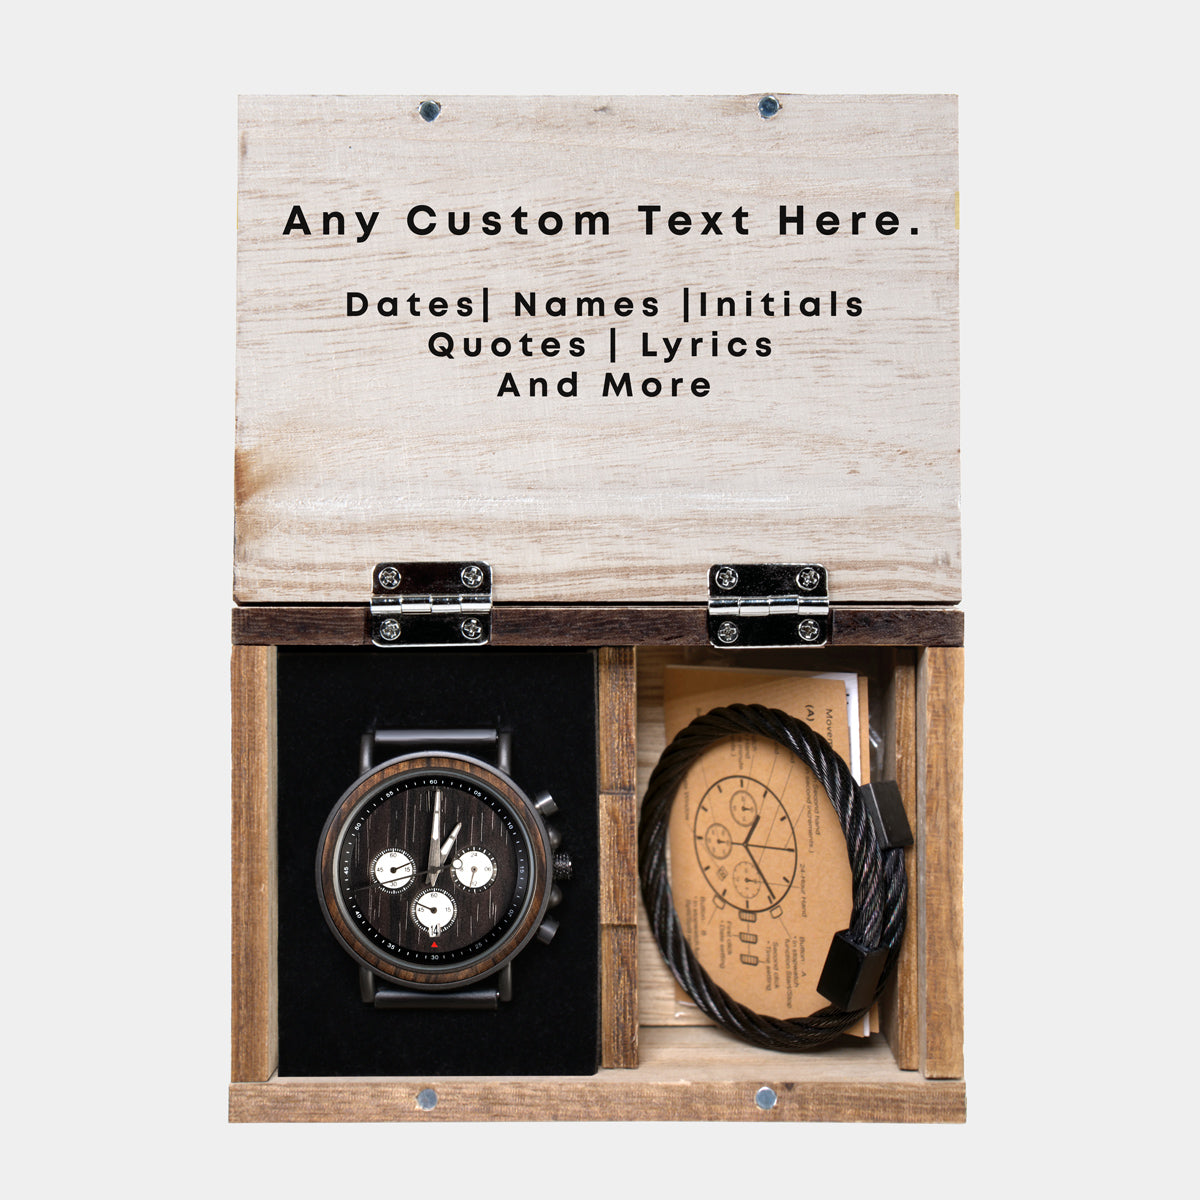 Montreal Expos Wooden Wristwatch - Chronograph Black Walnut Watch